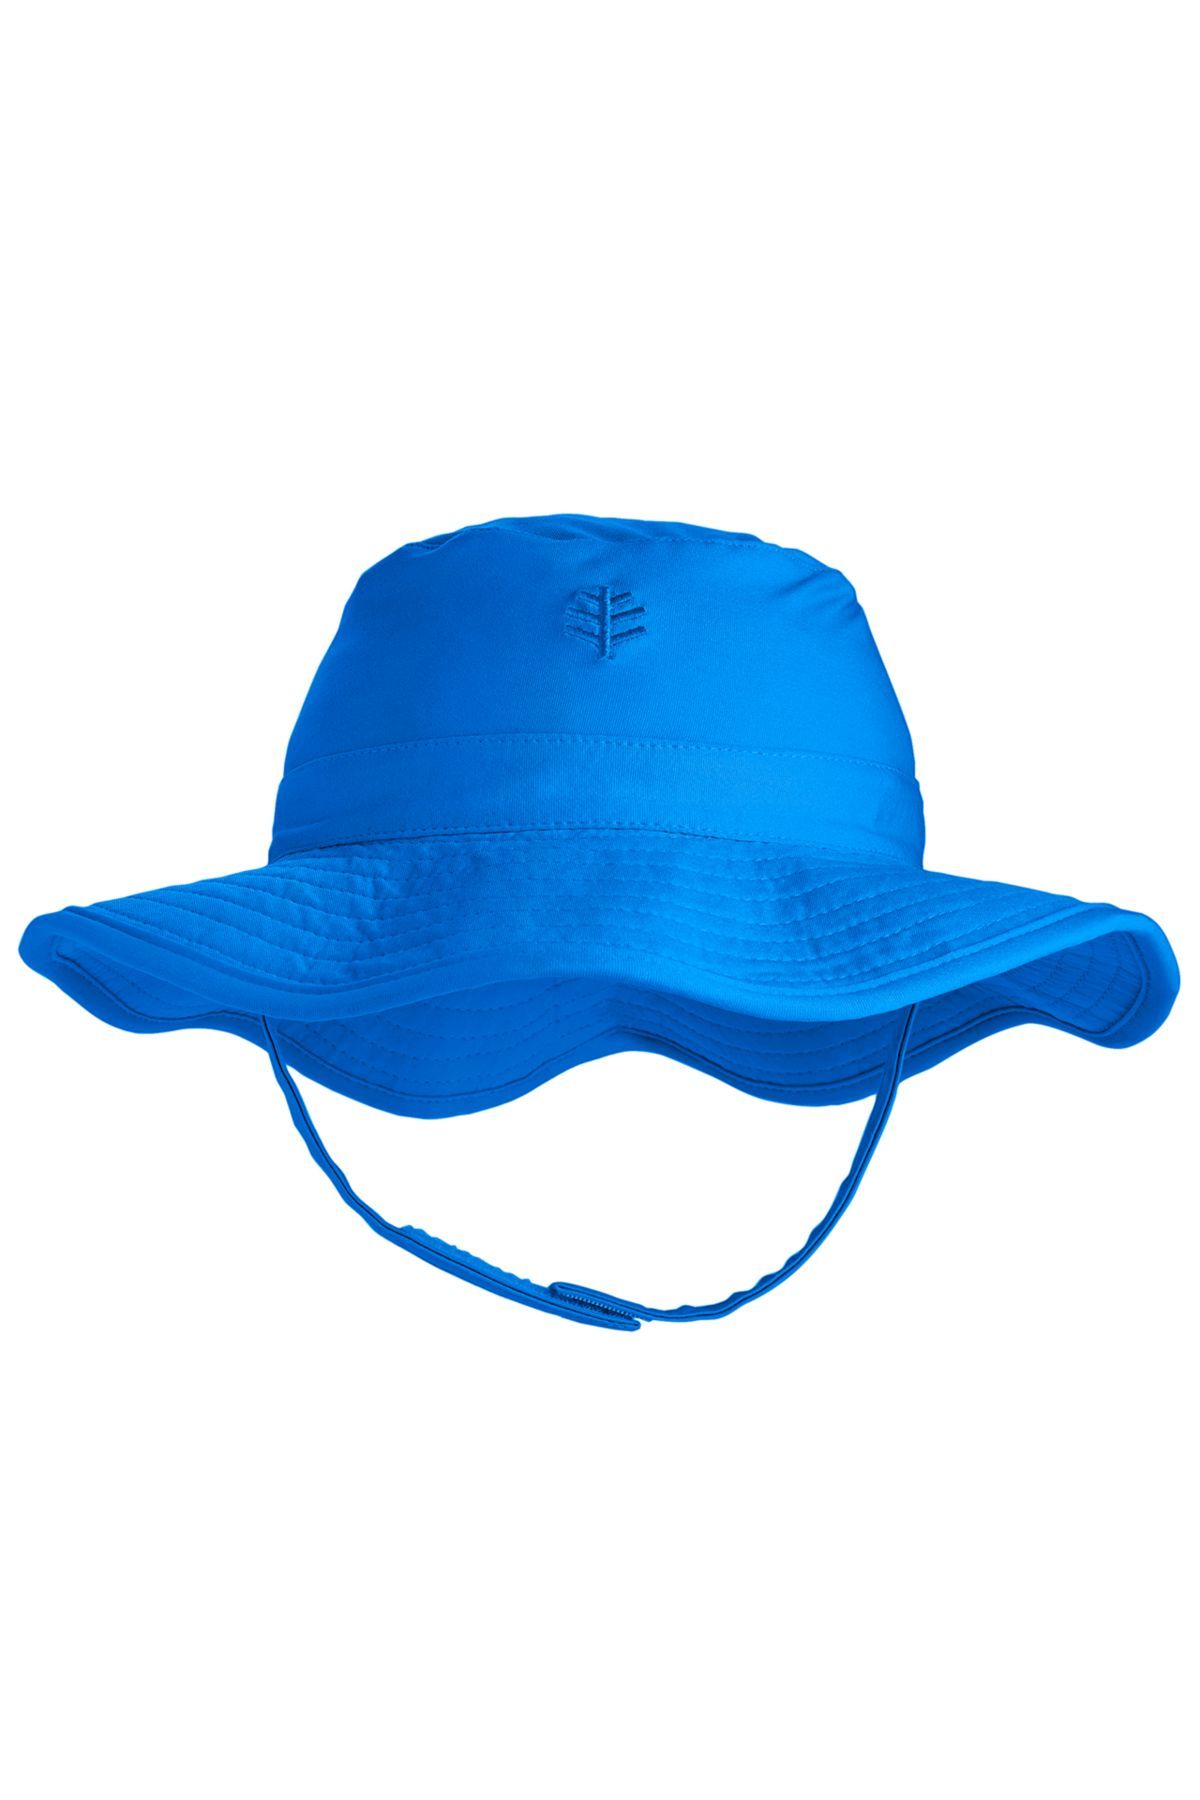 Baby Splashy Bucket Hat UPF 50+ | Coolibar